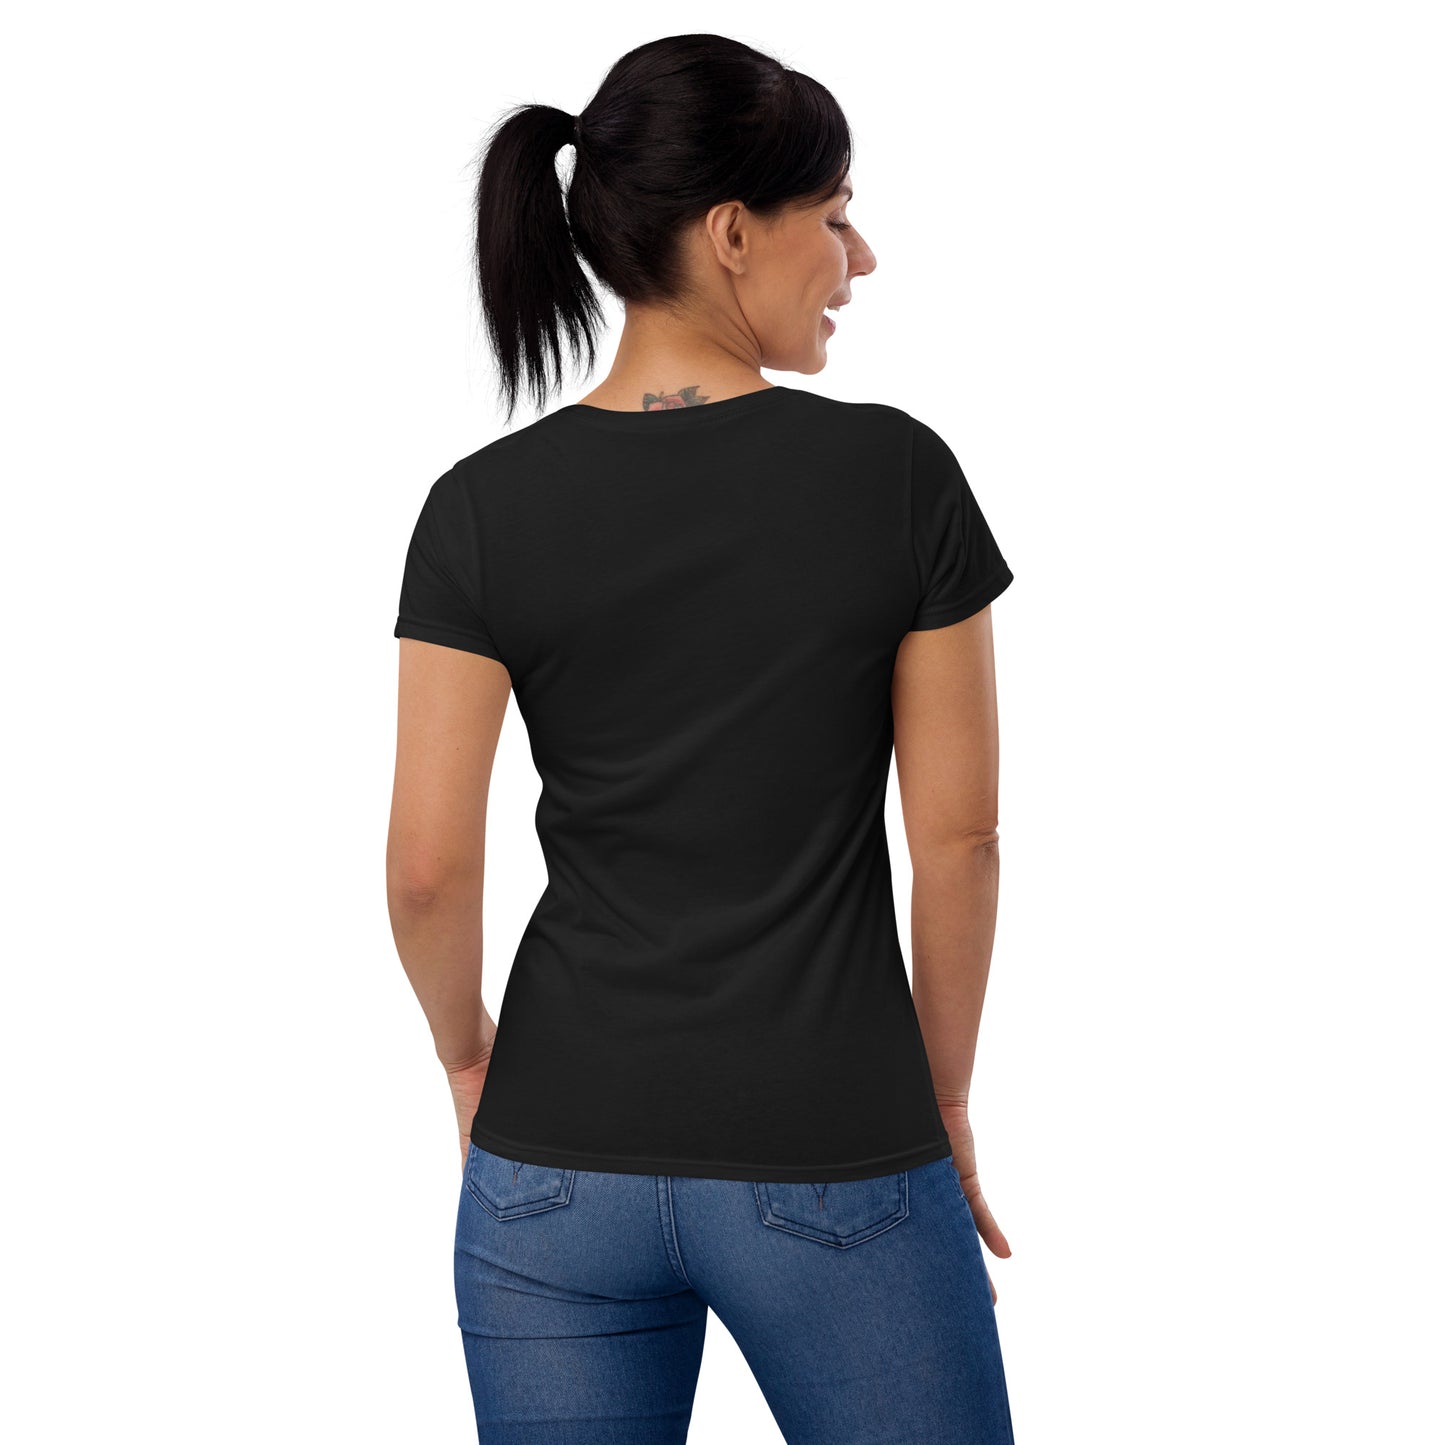 Women's Fitness Hooligans short sleeve t-shirt